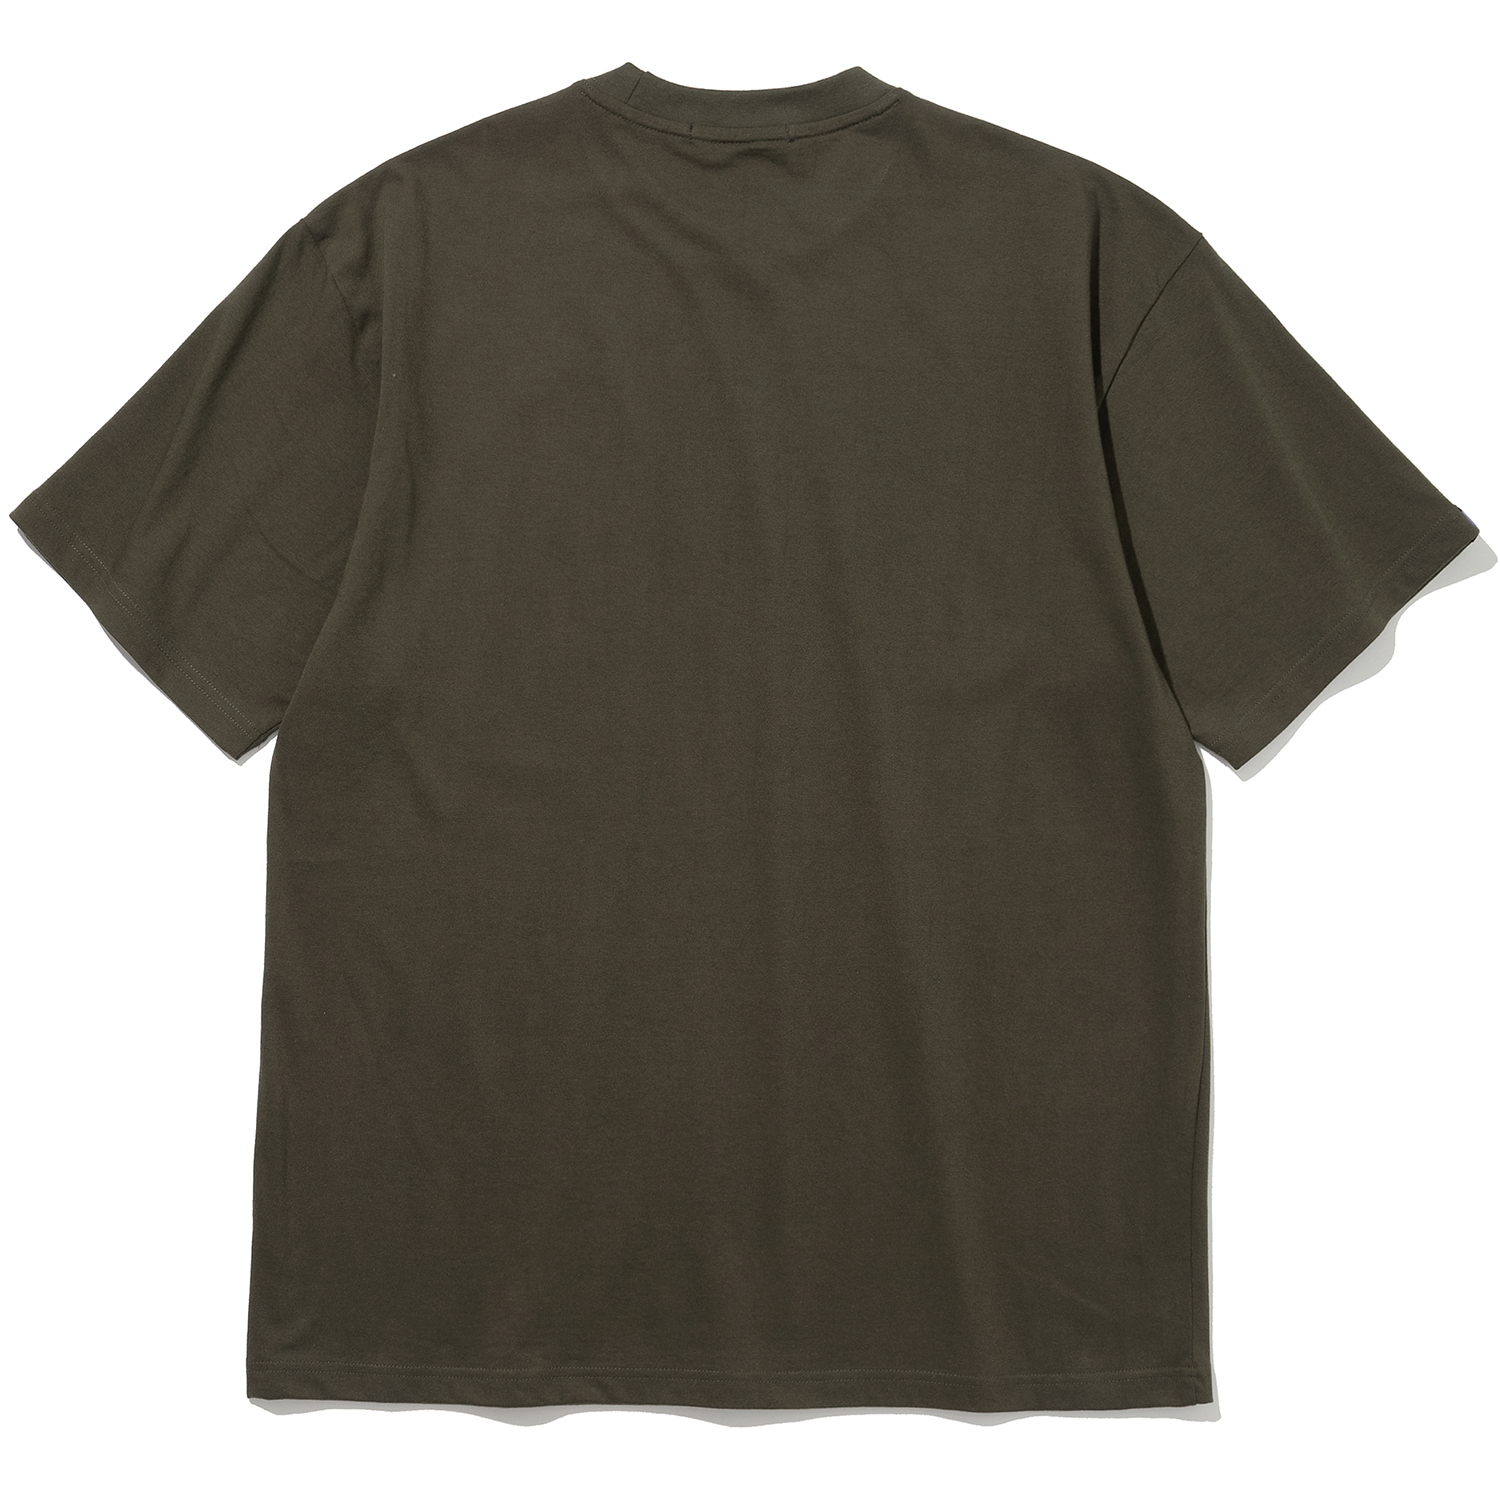 Burn up T-Shirts - Khaki,NOT4NERD